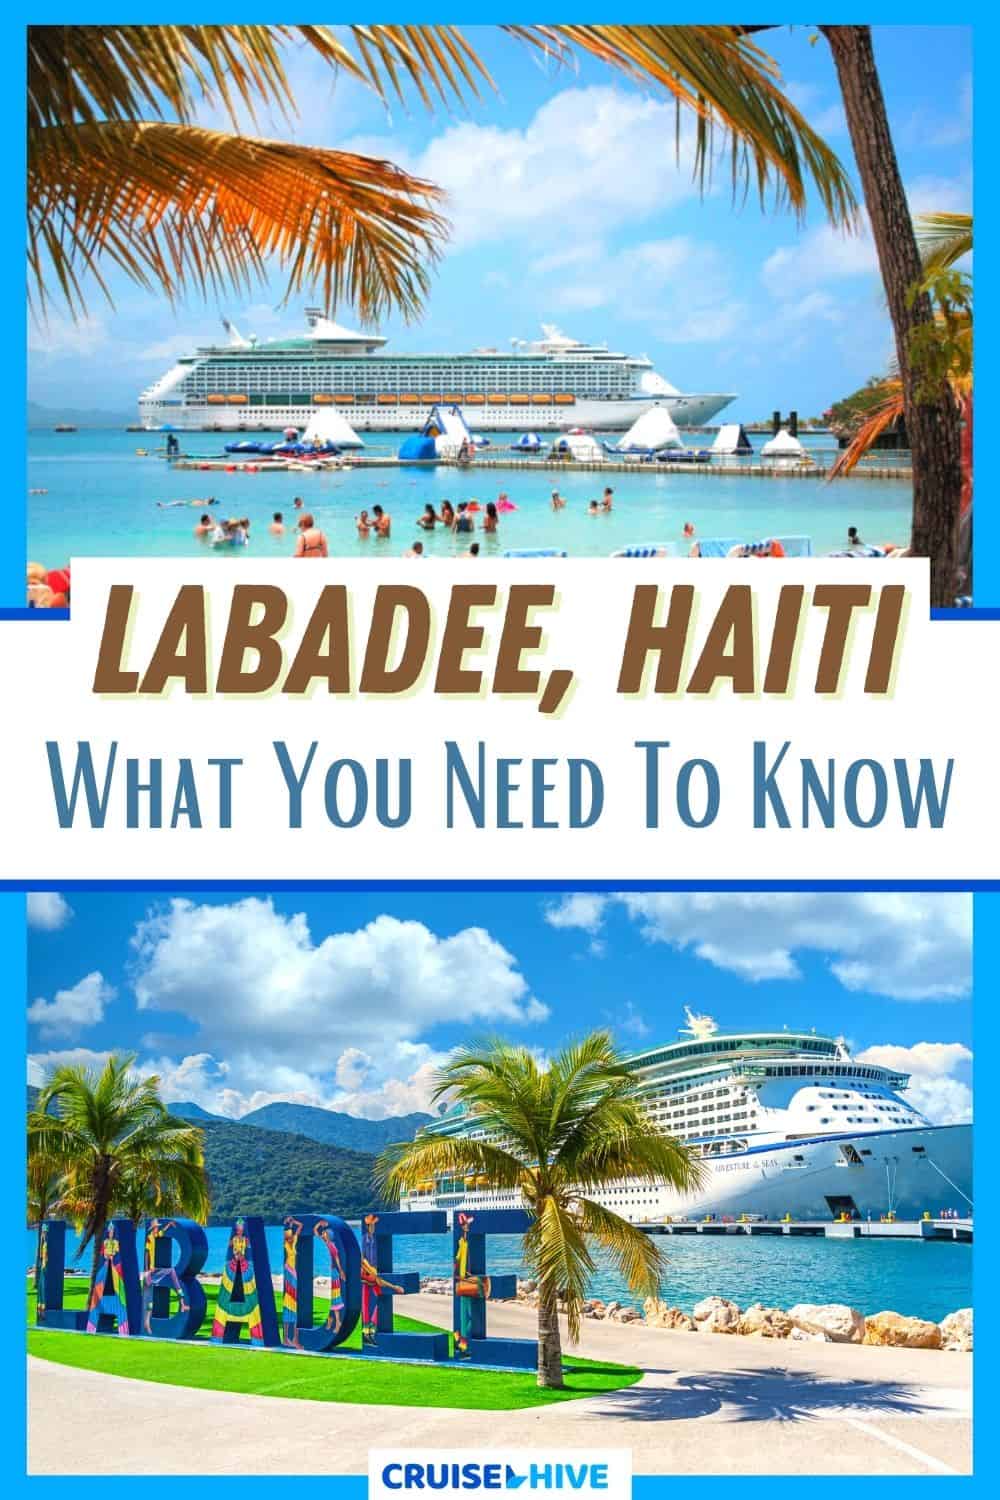 Labadee Haiti, Royal Caribbean